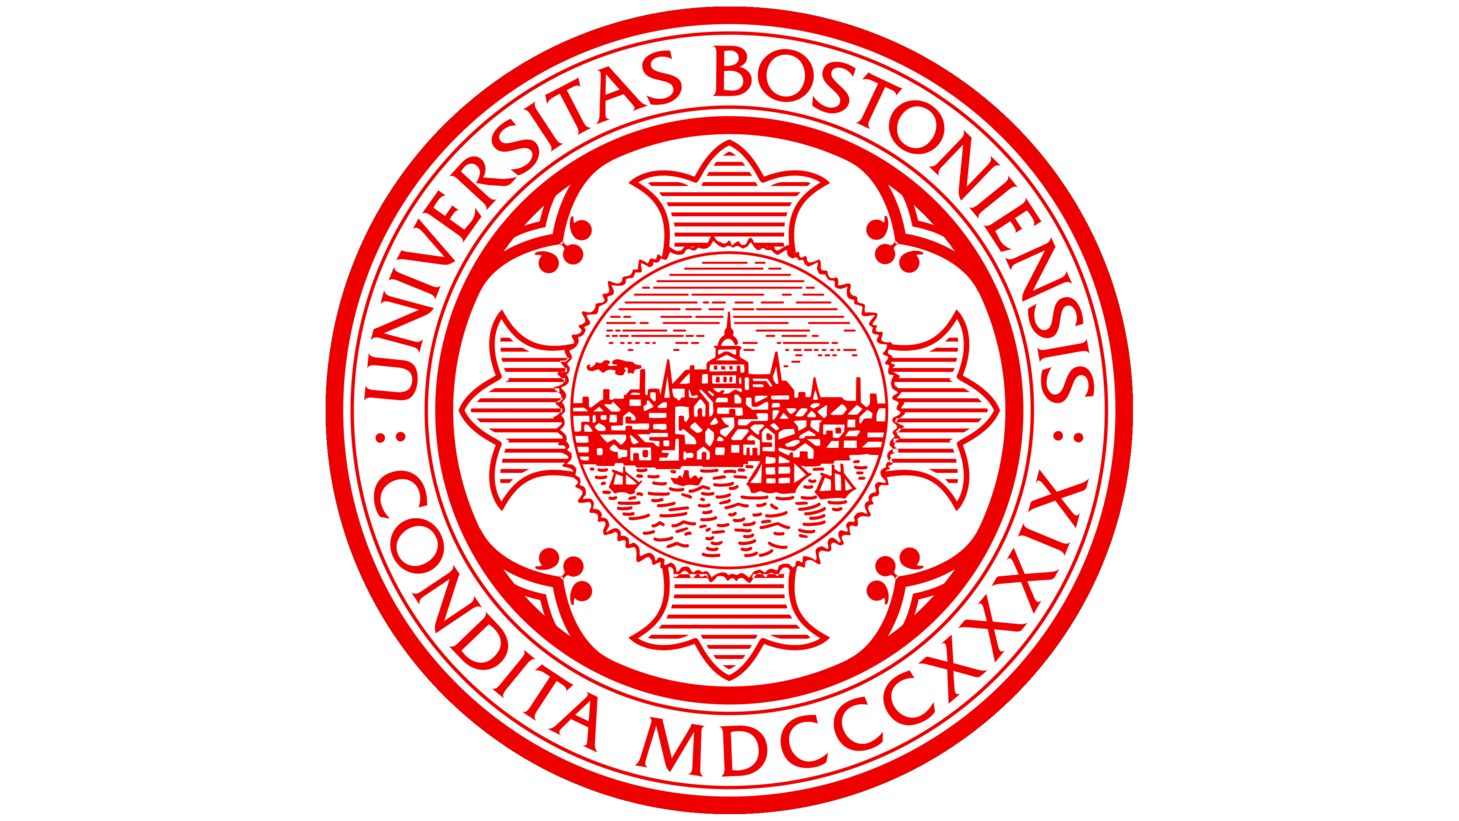 Boston university seal sign